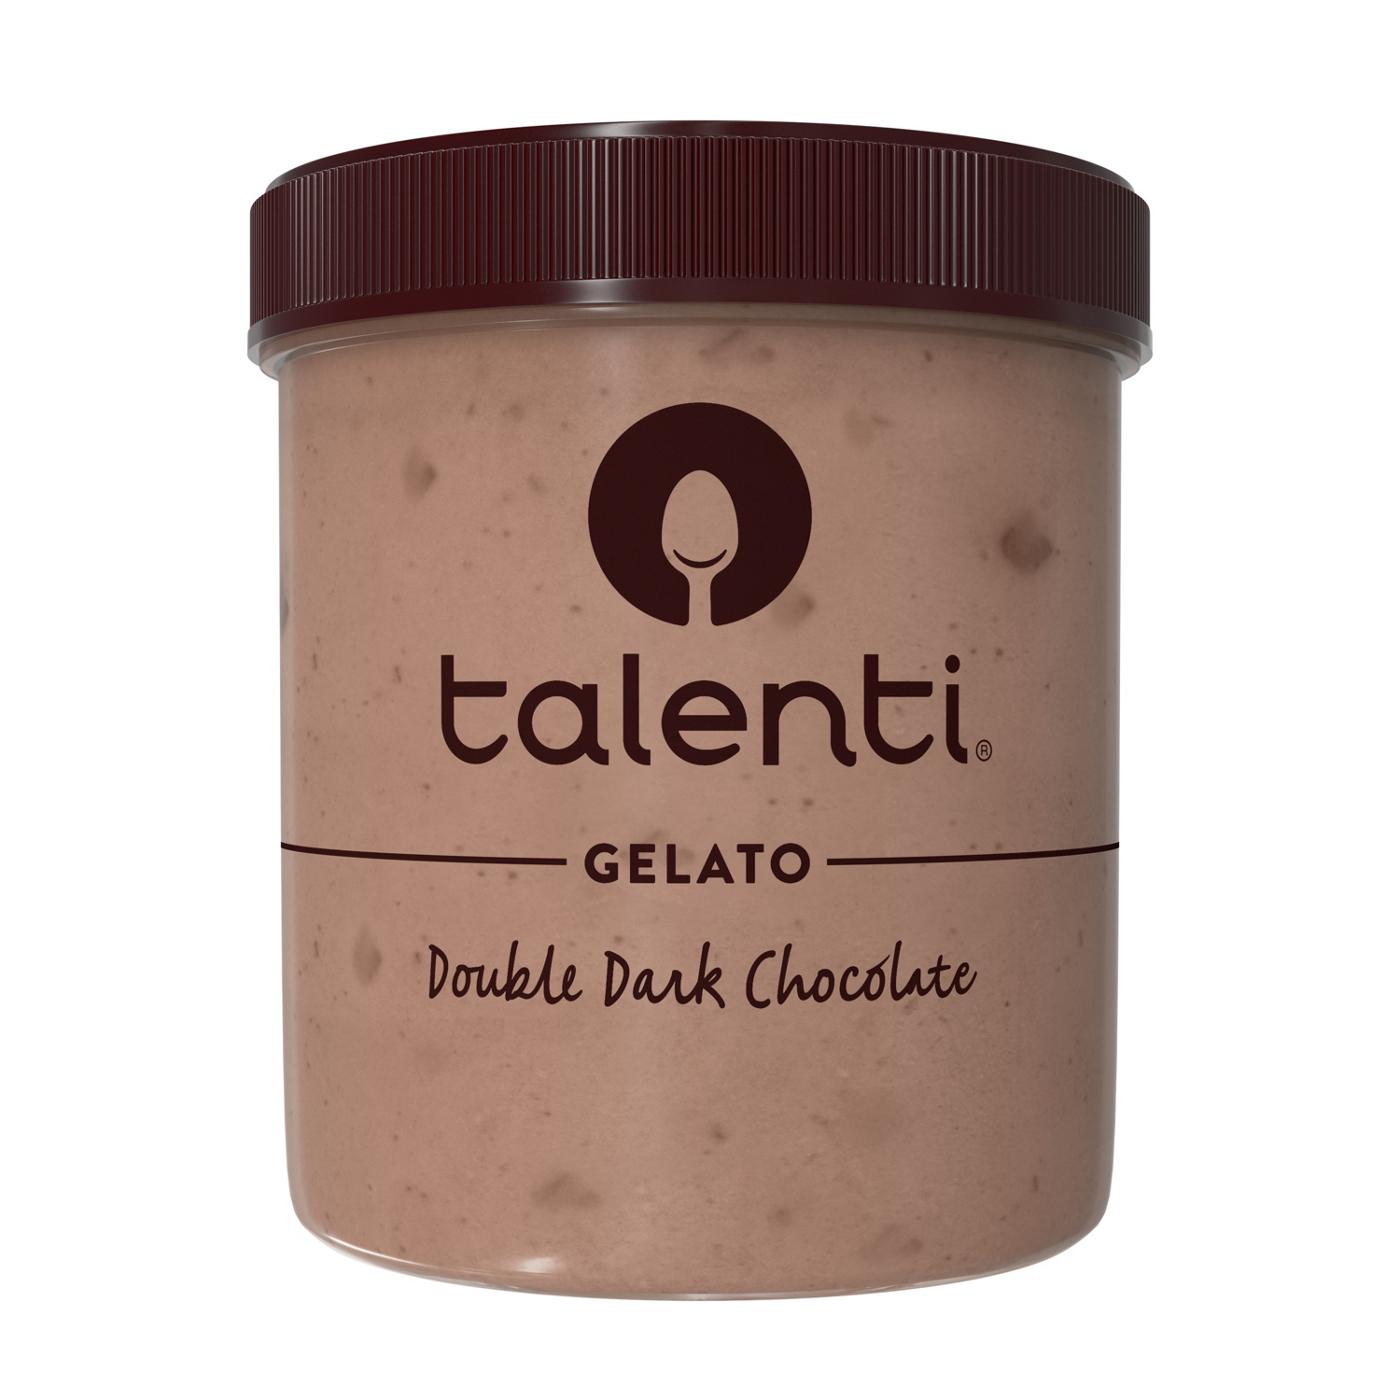 Talenti Gelato Double Dark Chocolate; image 1 of 2